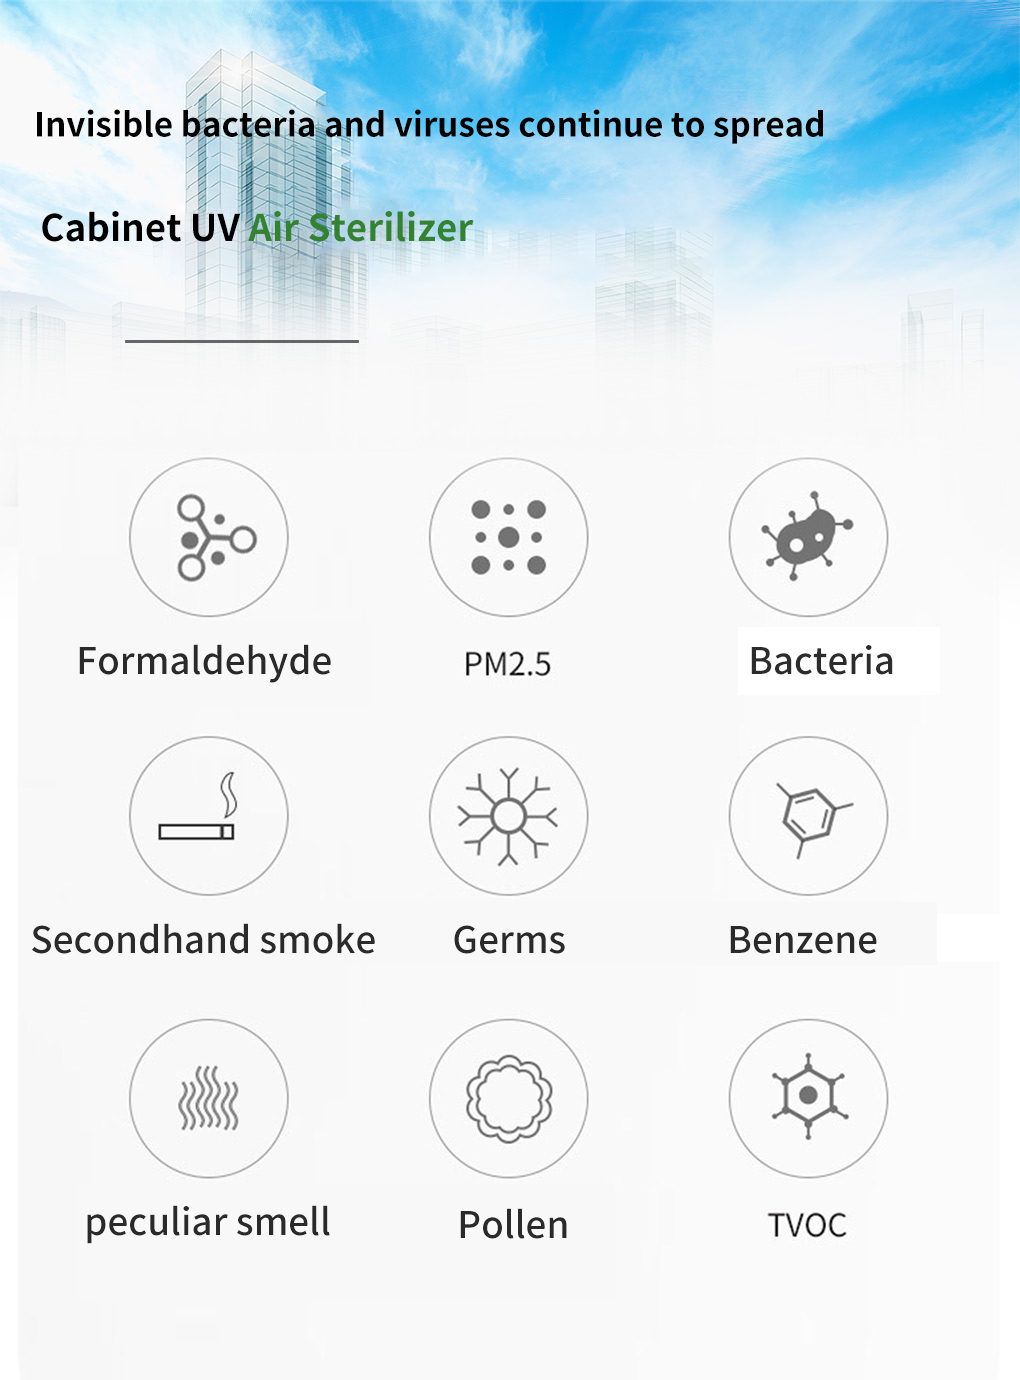 Cabinet UV Air Sterilizer